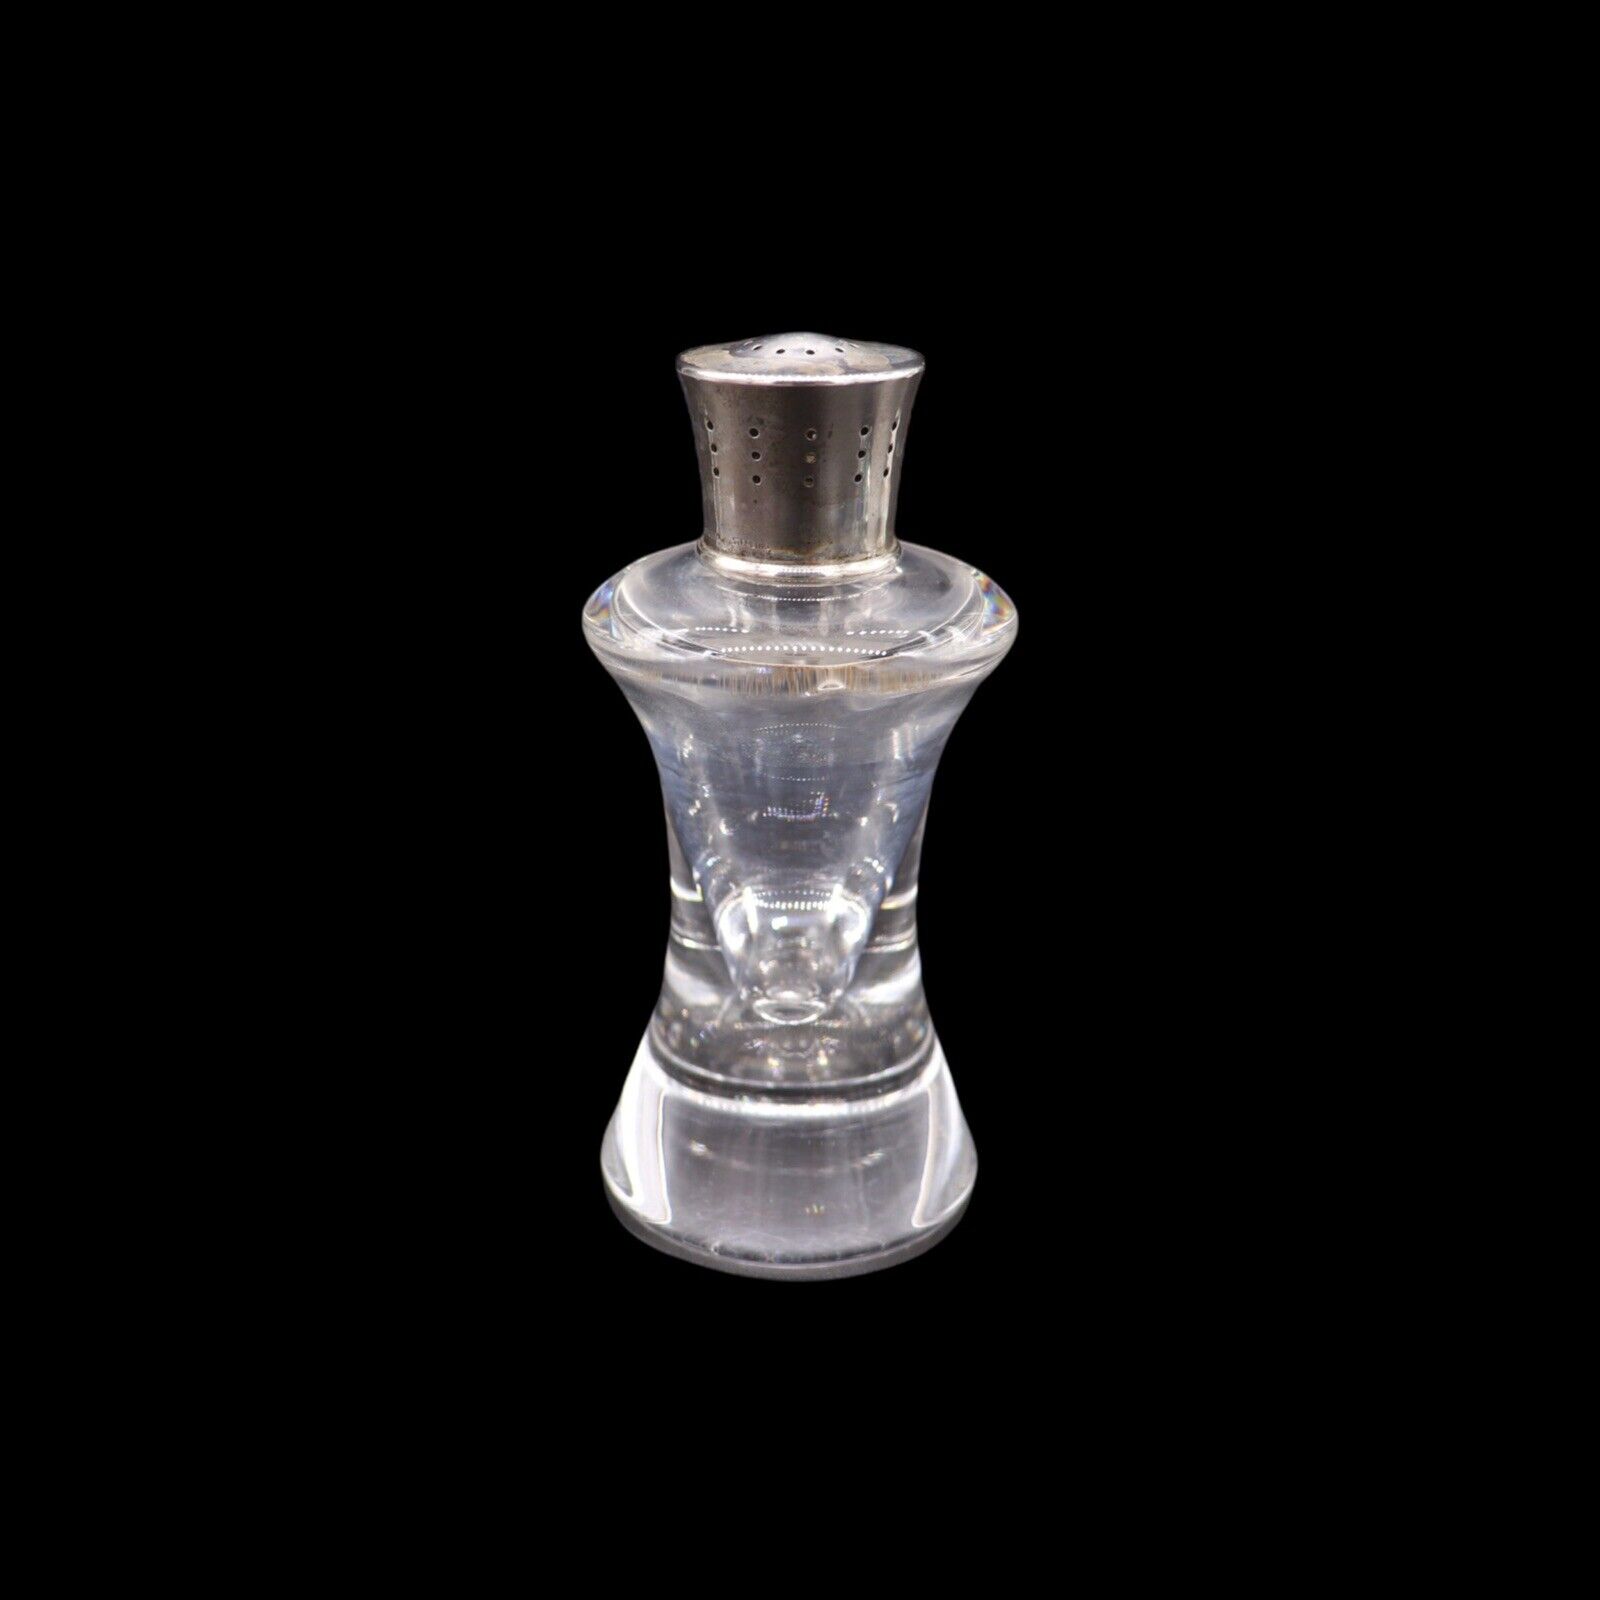 RARE Steuben Art Glass Salt Shaker with Sterling Lid Designed by Arthur Douglas